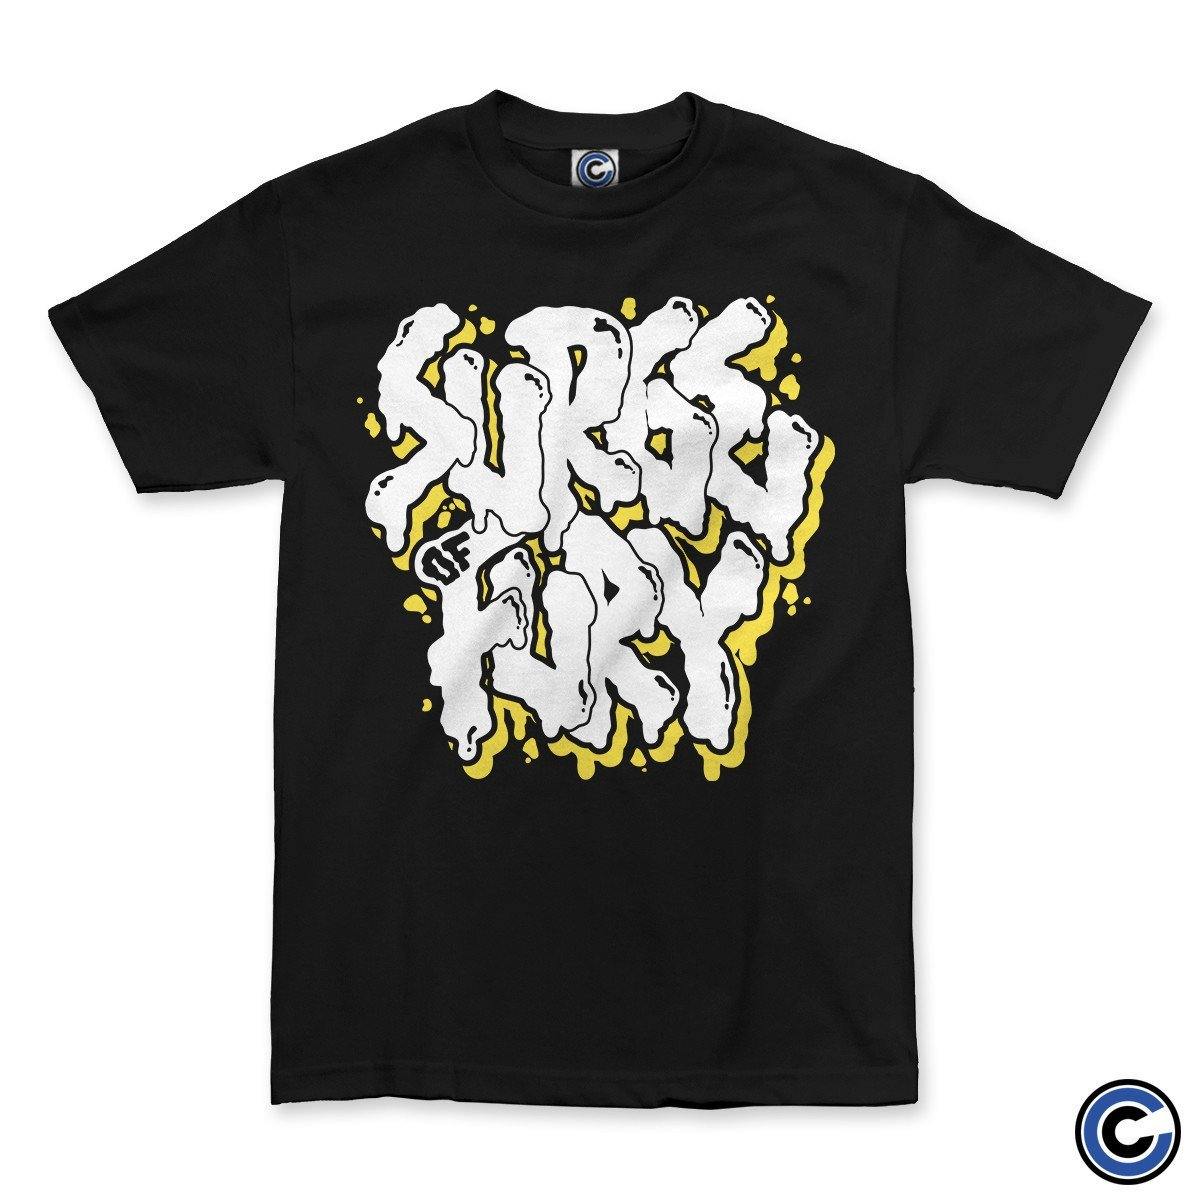 Buy – Surge of Fury "Graf" Shirt – Band & Music Merch – Cold Cuts Merch